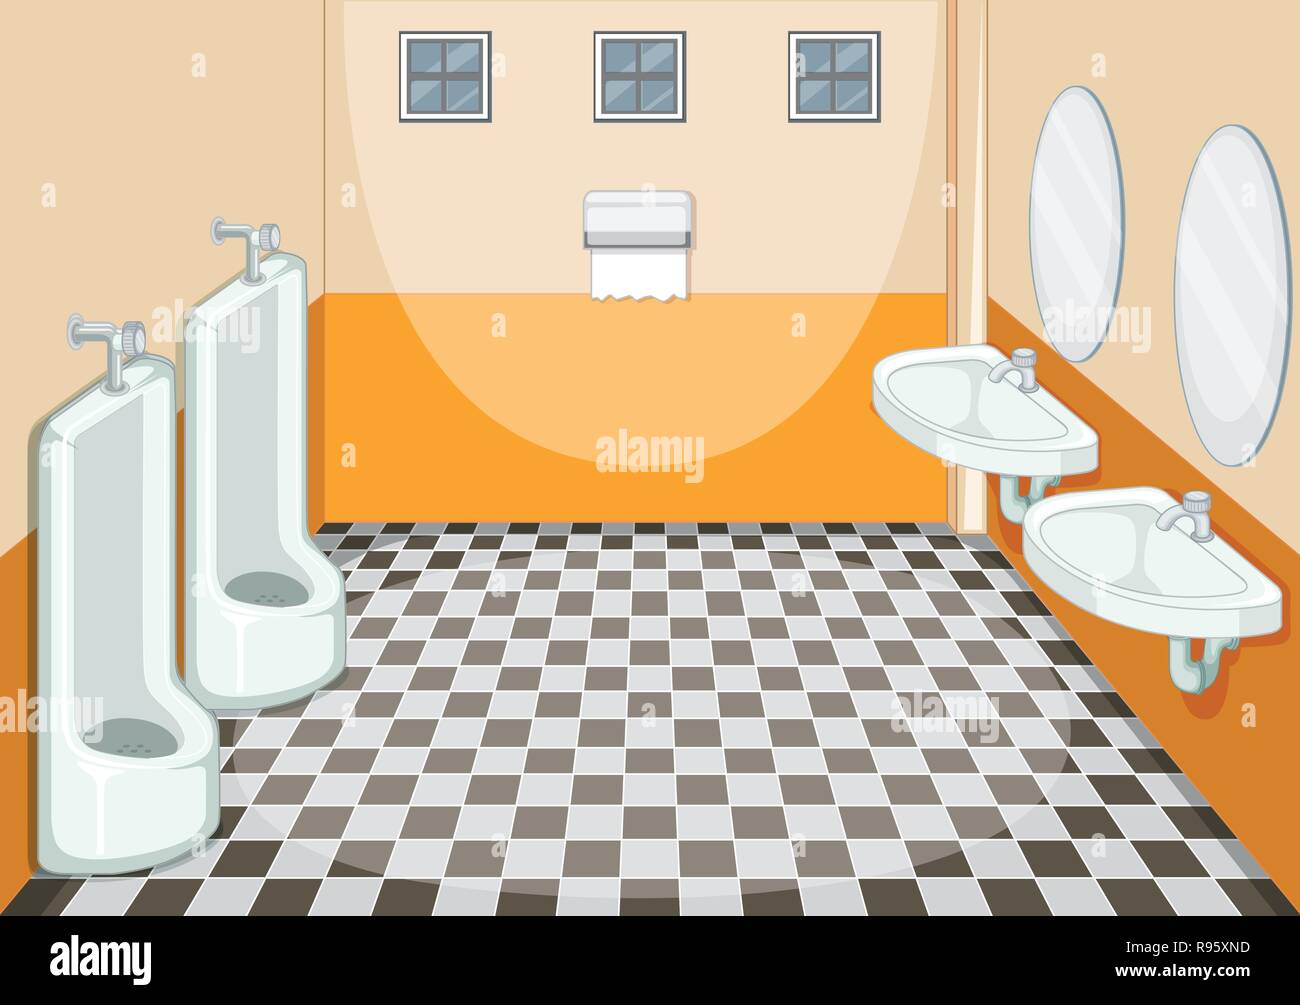 https://c8.alamy.com/comp/R95XND/interior-design-of-male-toilet-illustration-R95XND.jpg